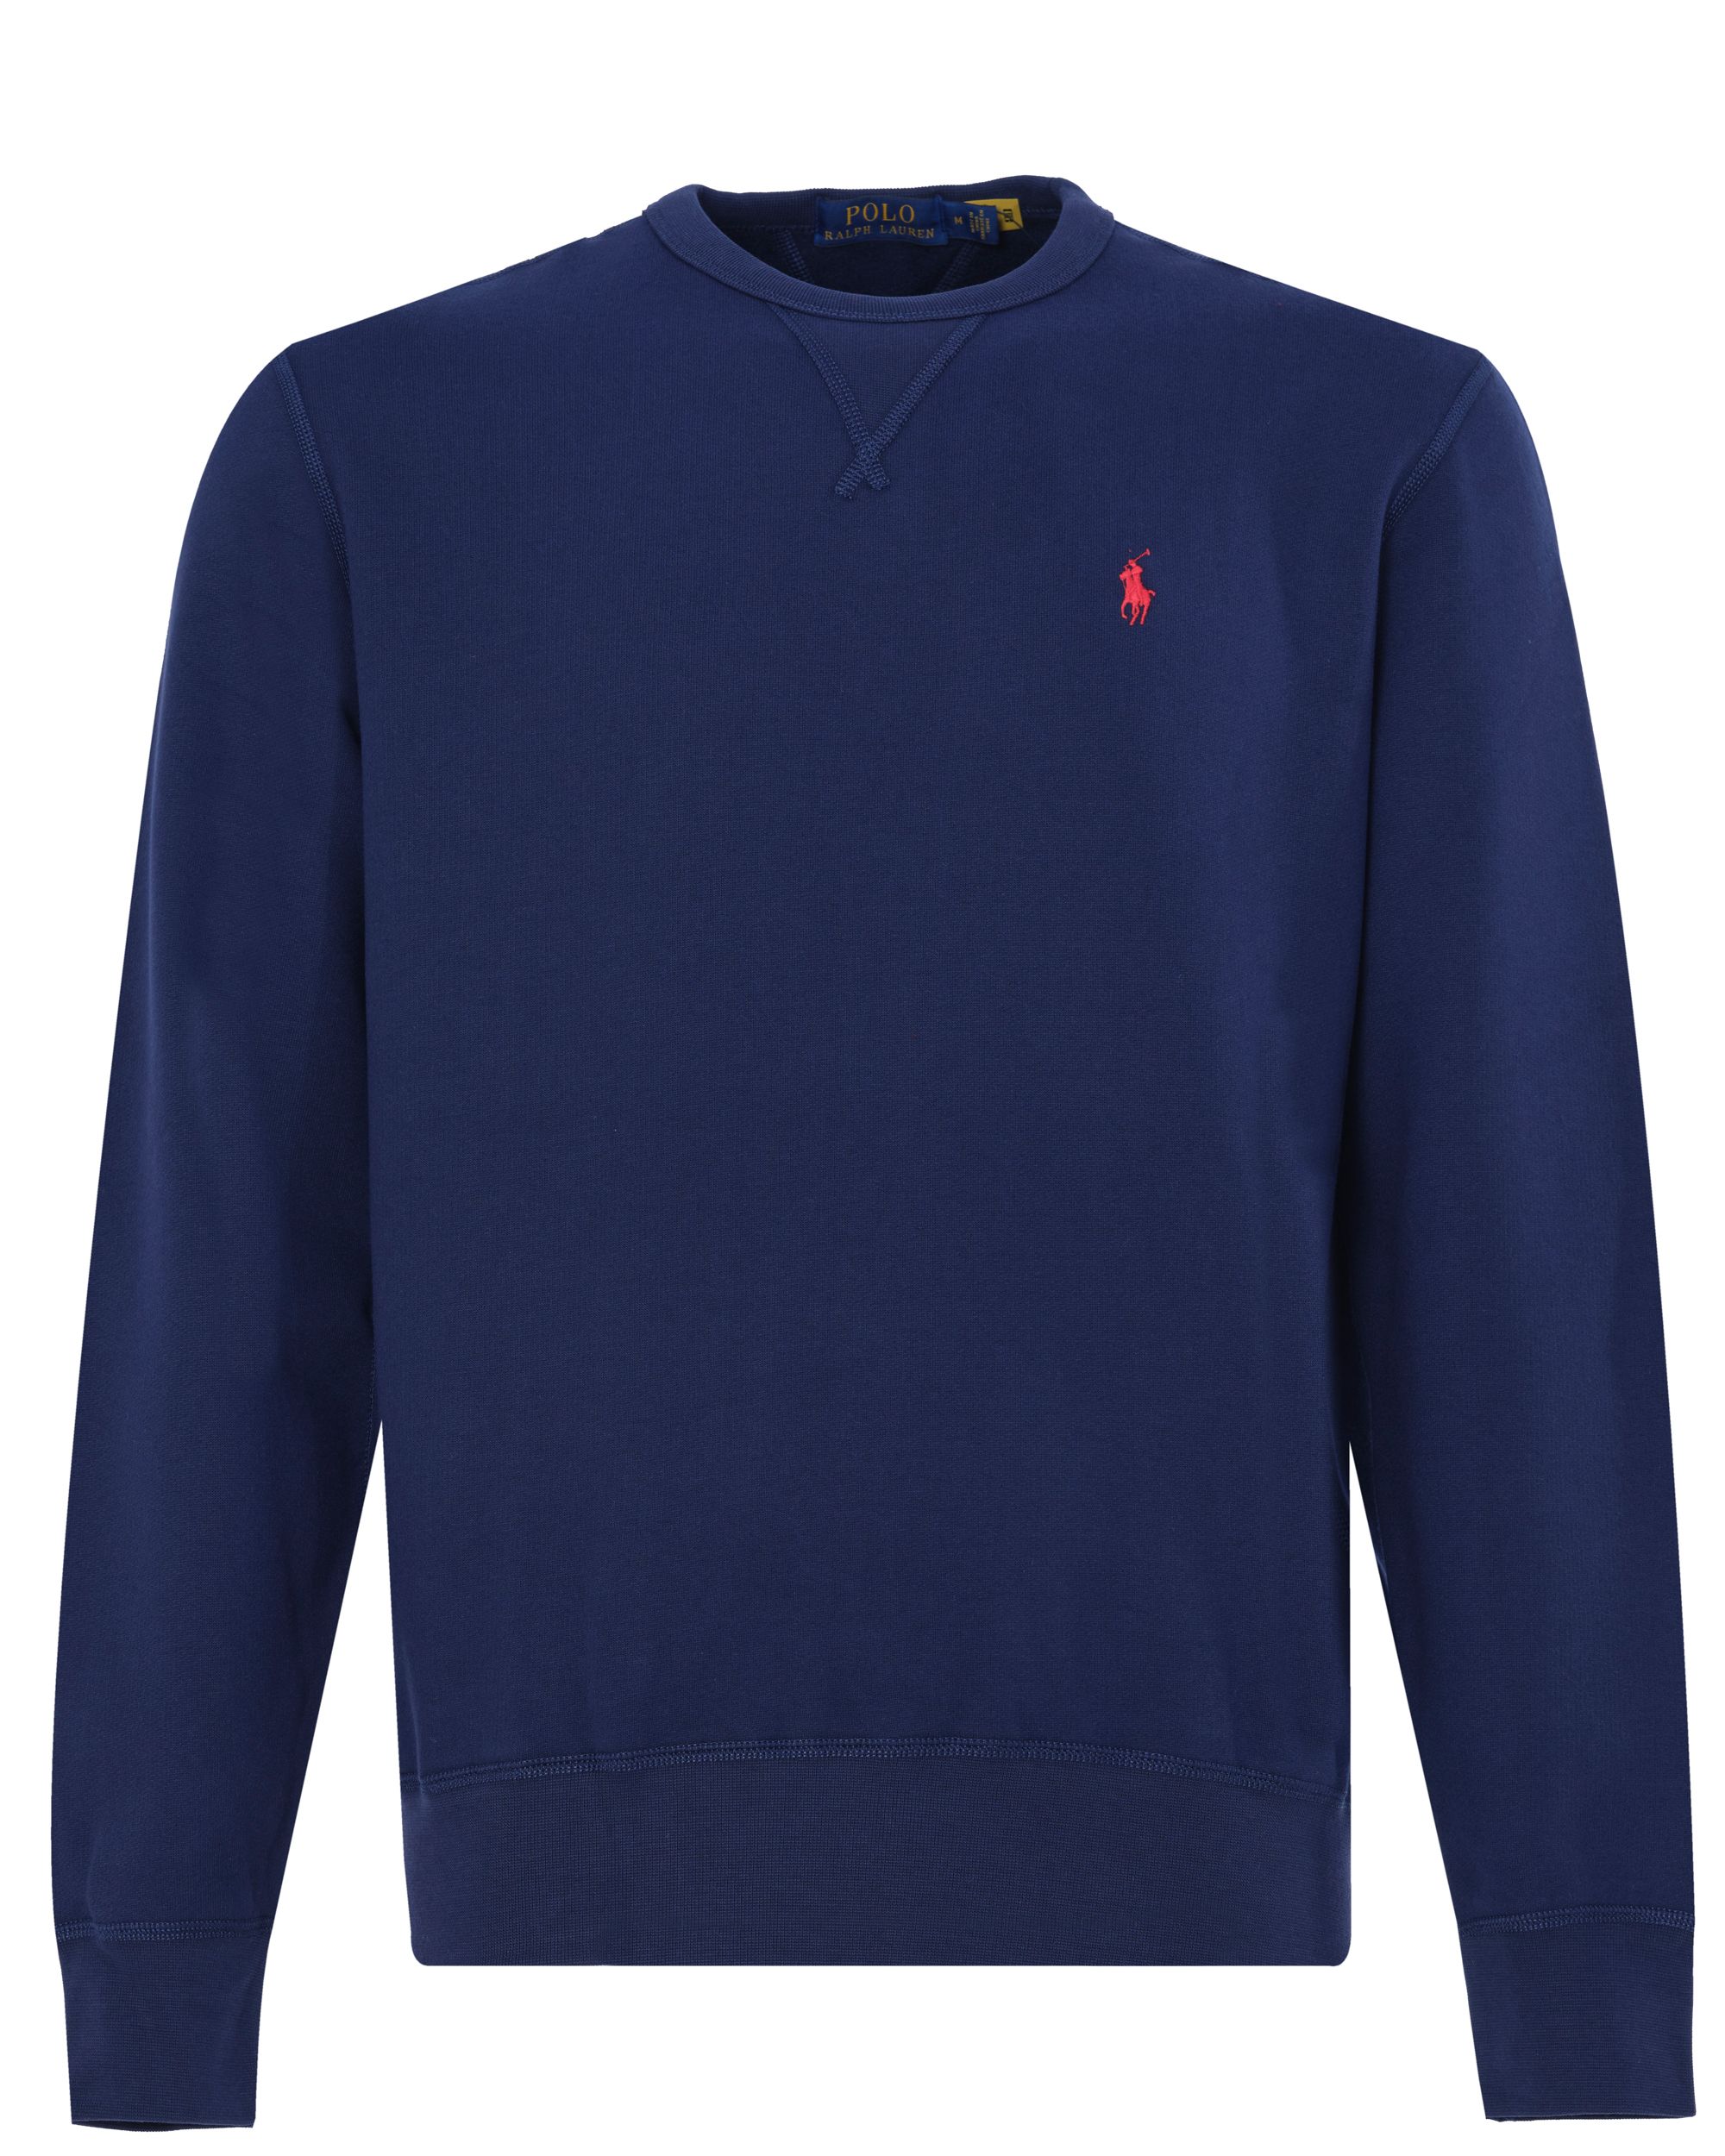 Polo Ralph Lauren Sweater Donker blauw 080565-001-L